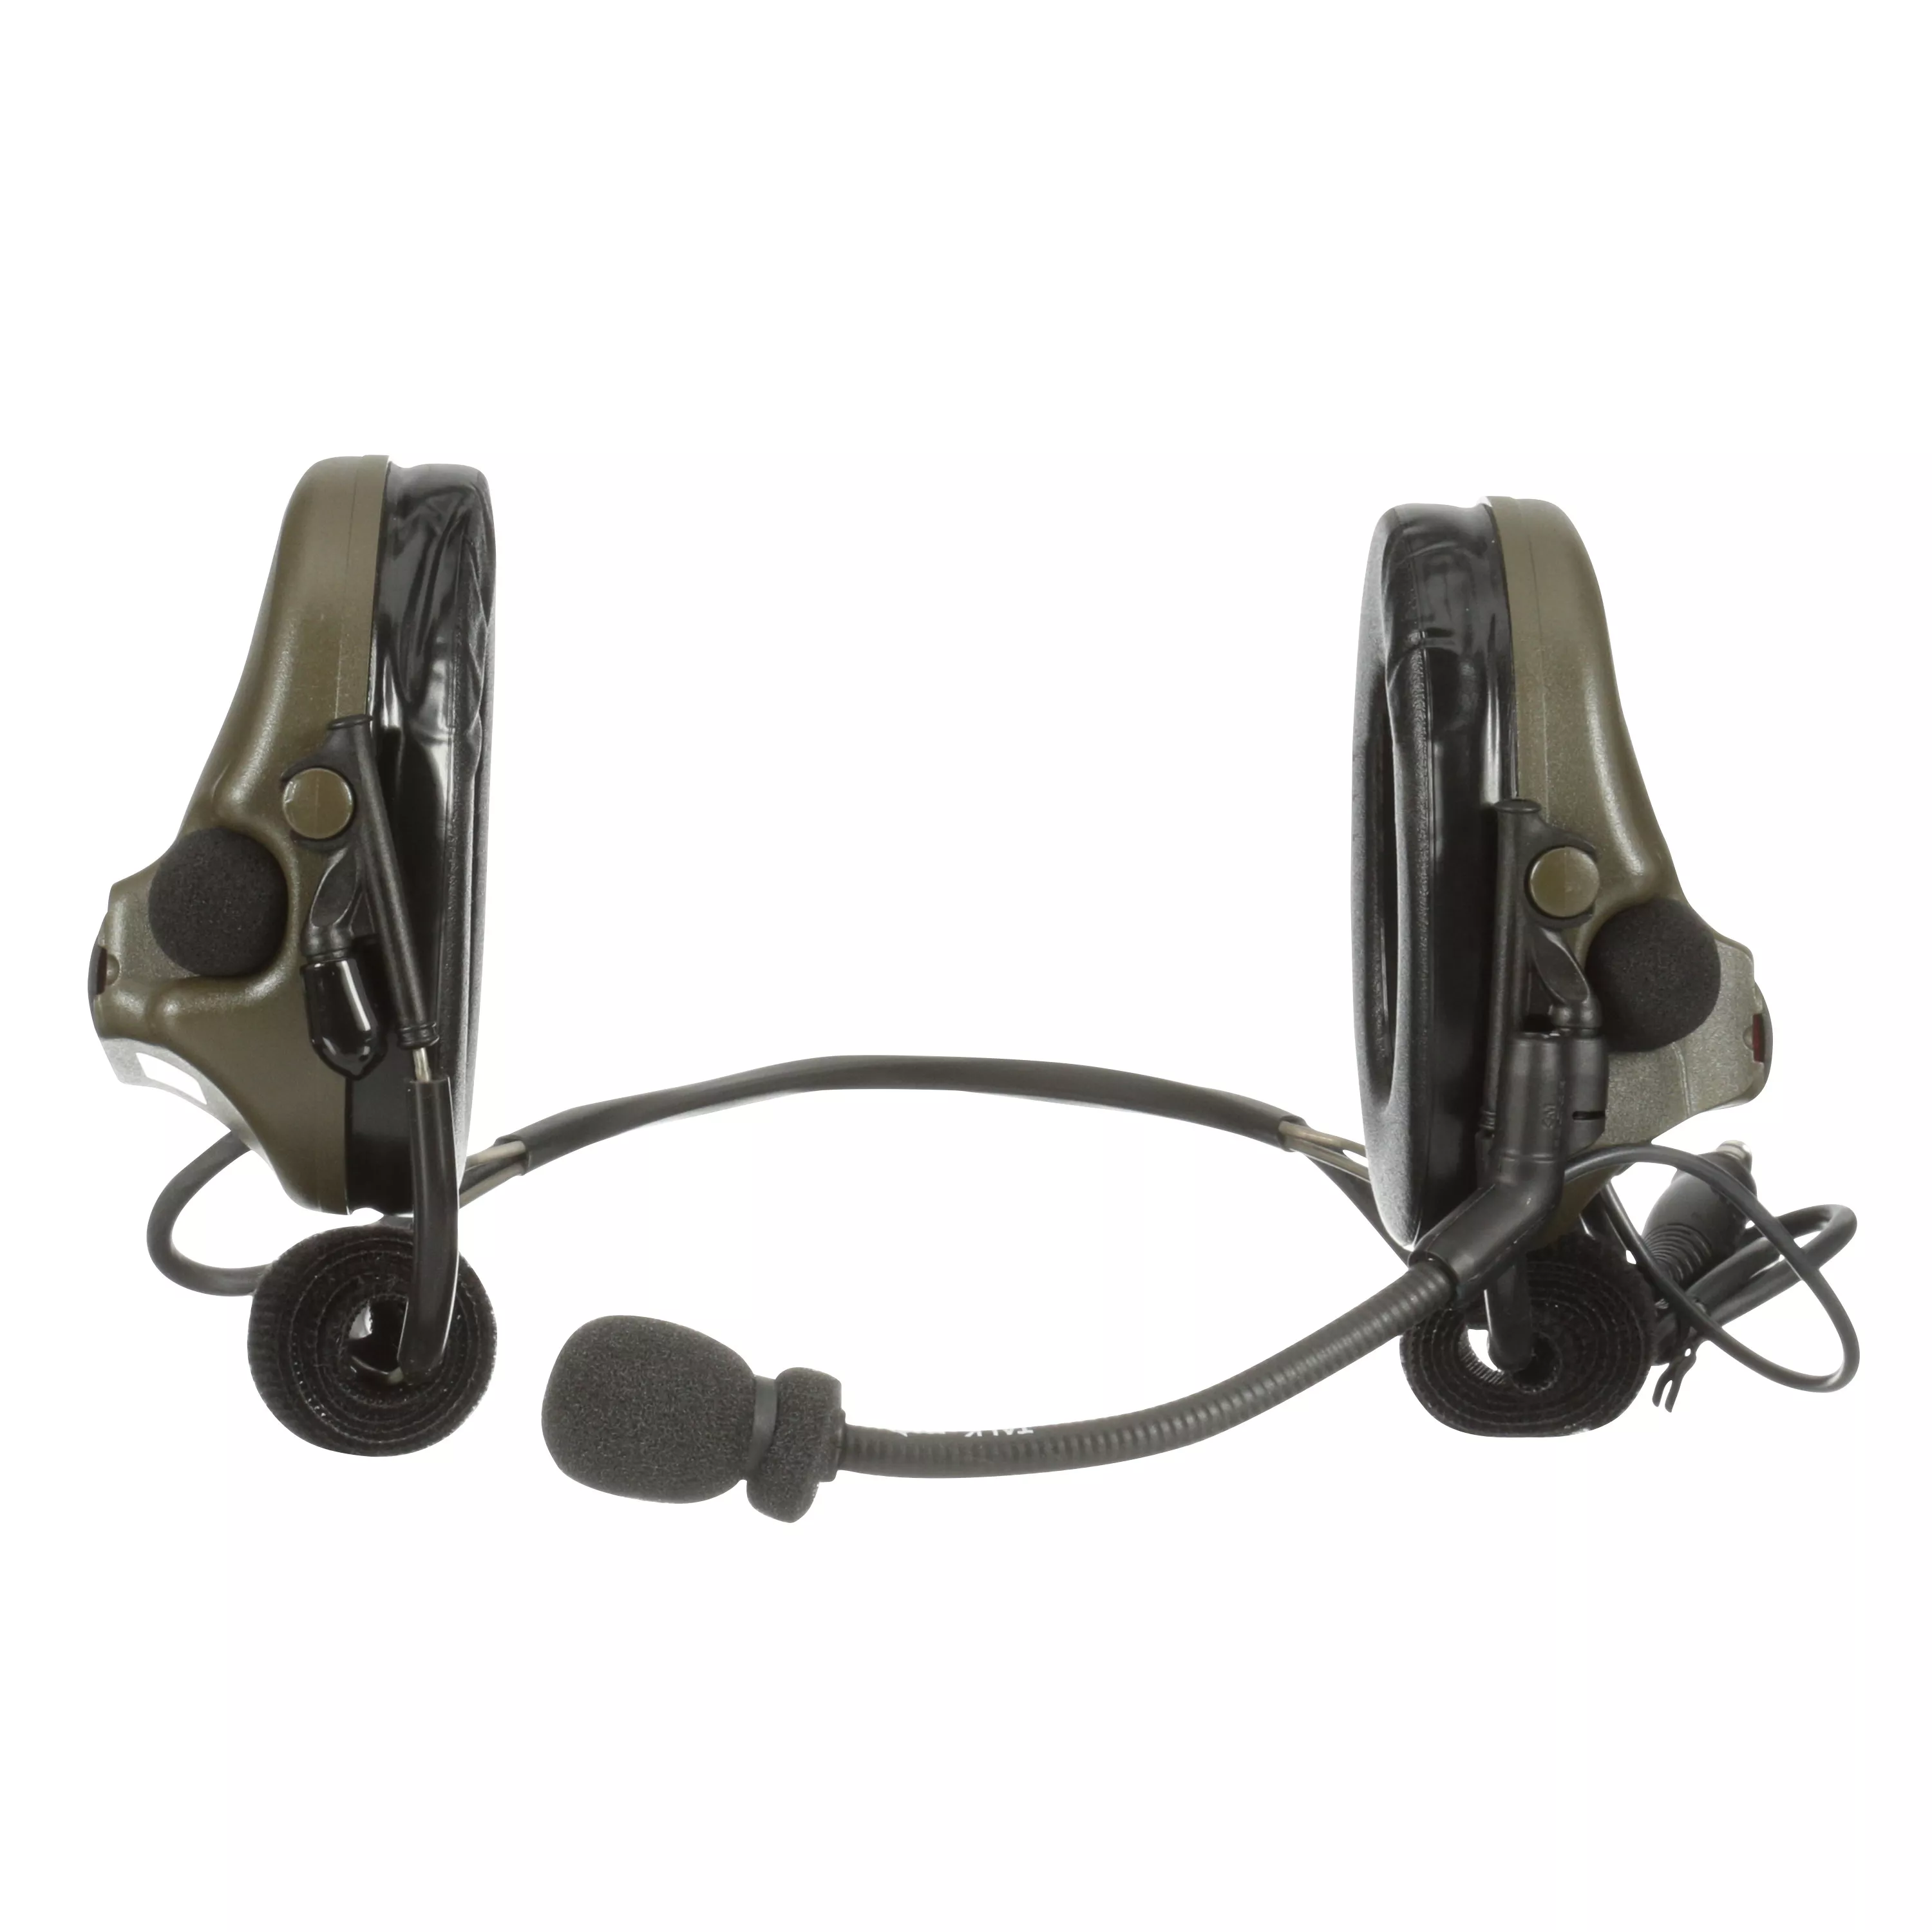 3M™ PELTOR™ ComTac™ V Headset MT20H682BB-47 GN, Neckband, Single Lead,
Standard Dynamic Mic, NATO Wiring, Green, 10 ea/Case